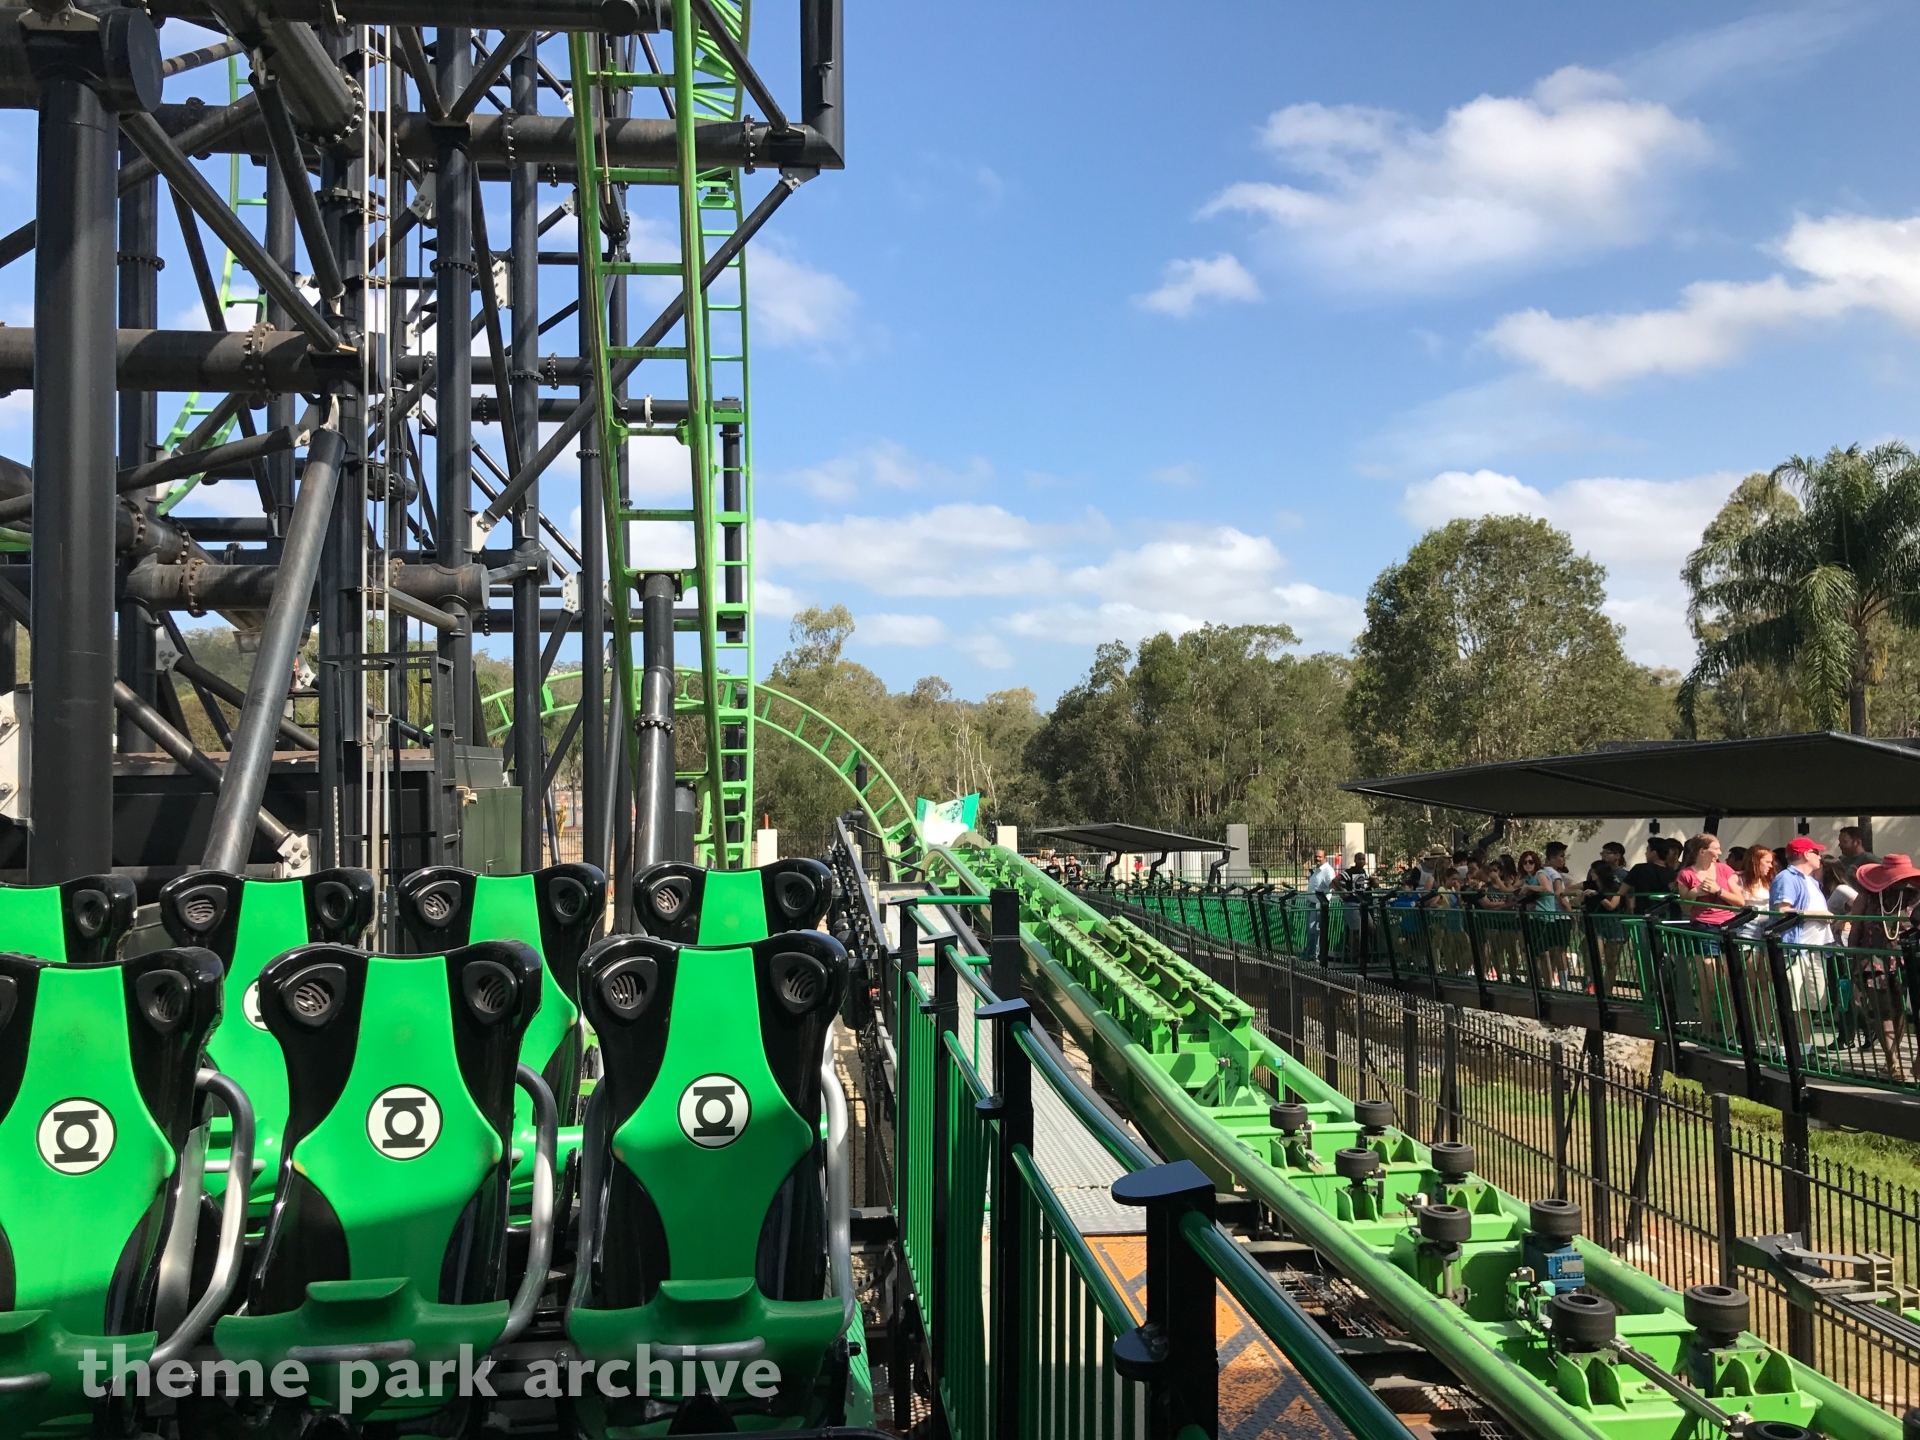 Green Lantern Coaster At Warner Bros Movie World Theme Park Archive